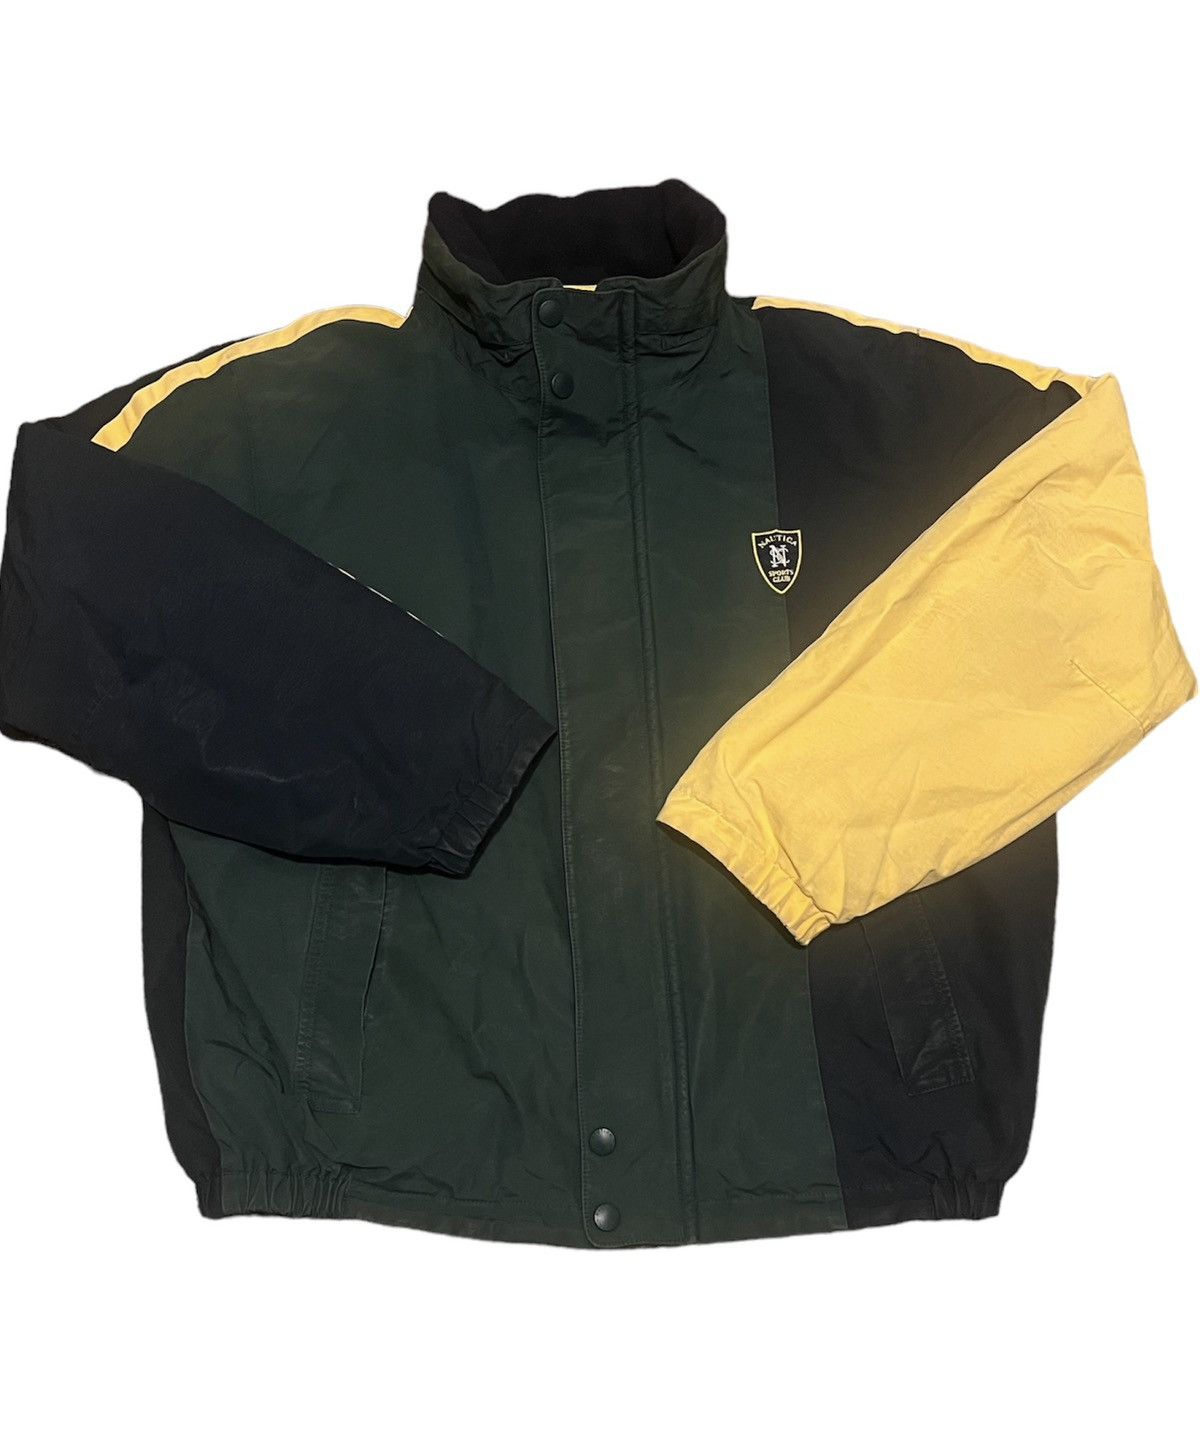 Nautica Vintage Nautica reversible jacket | Grailed